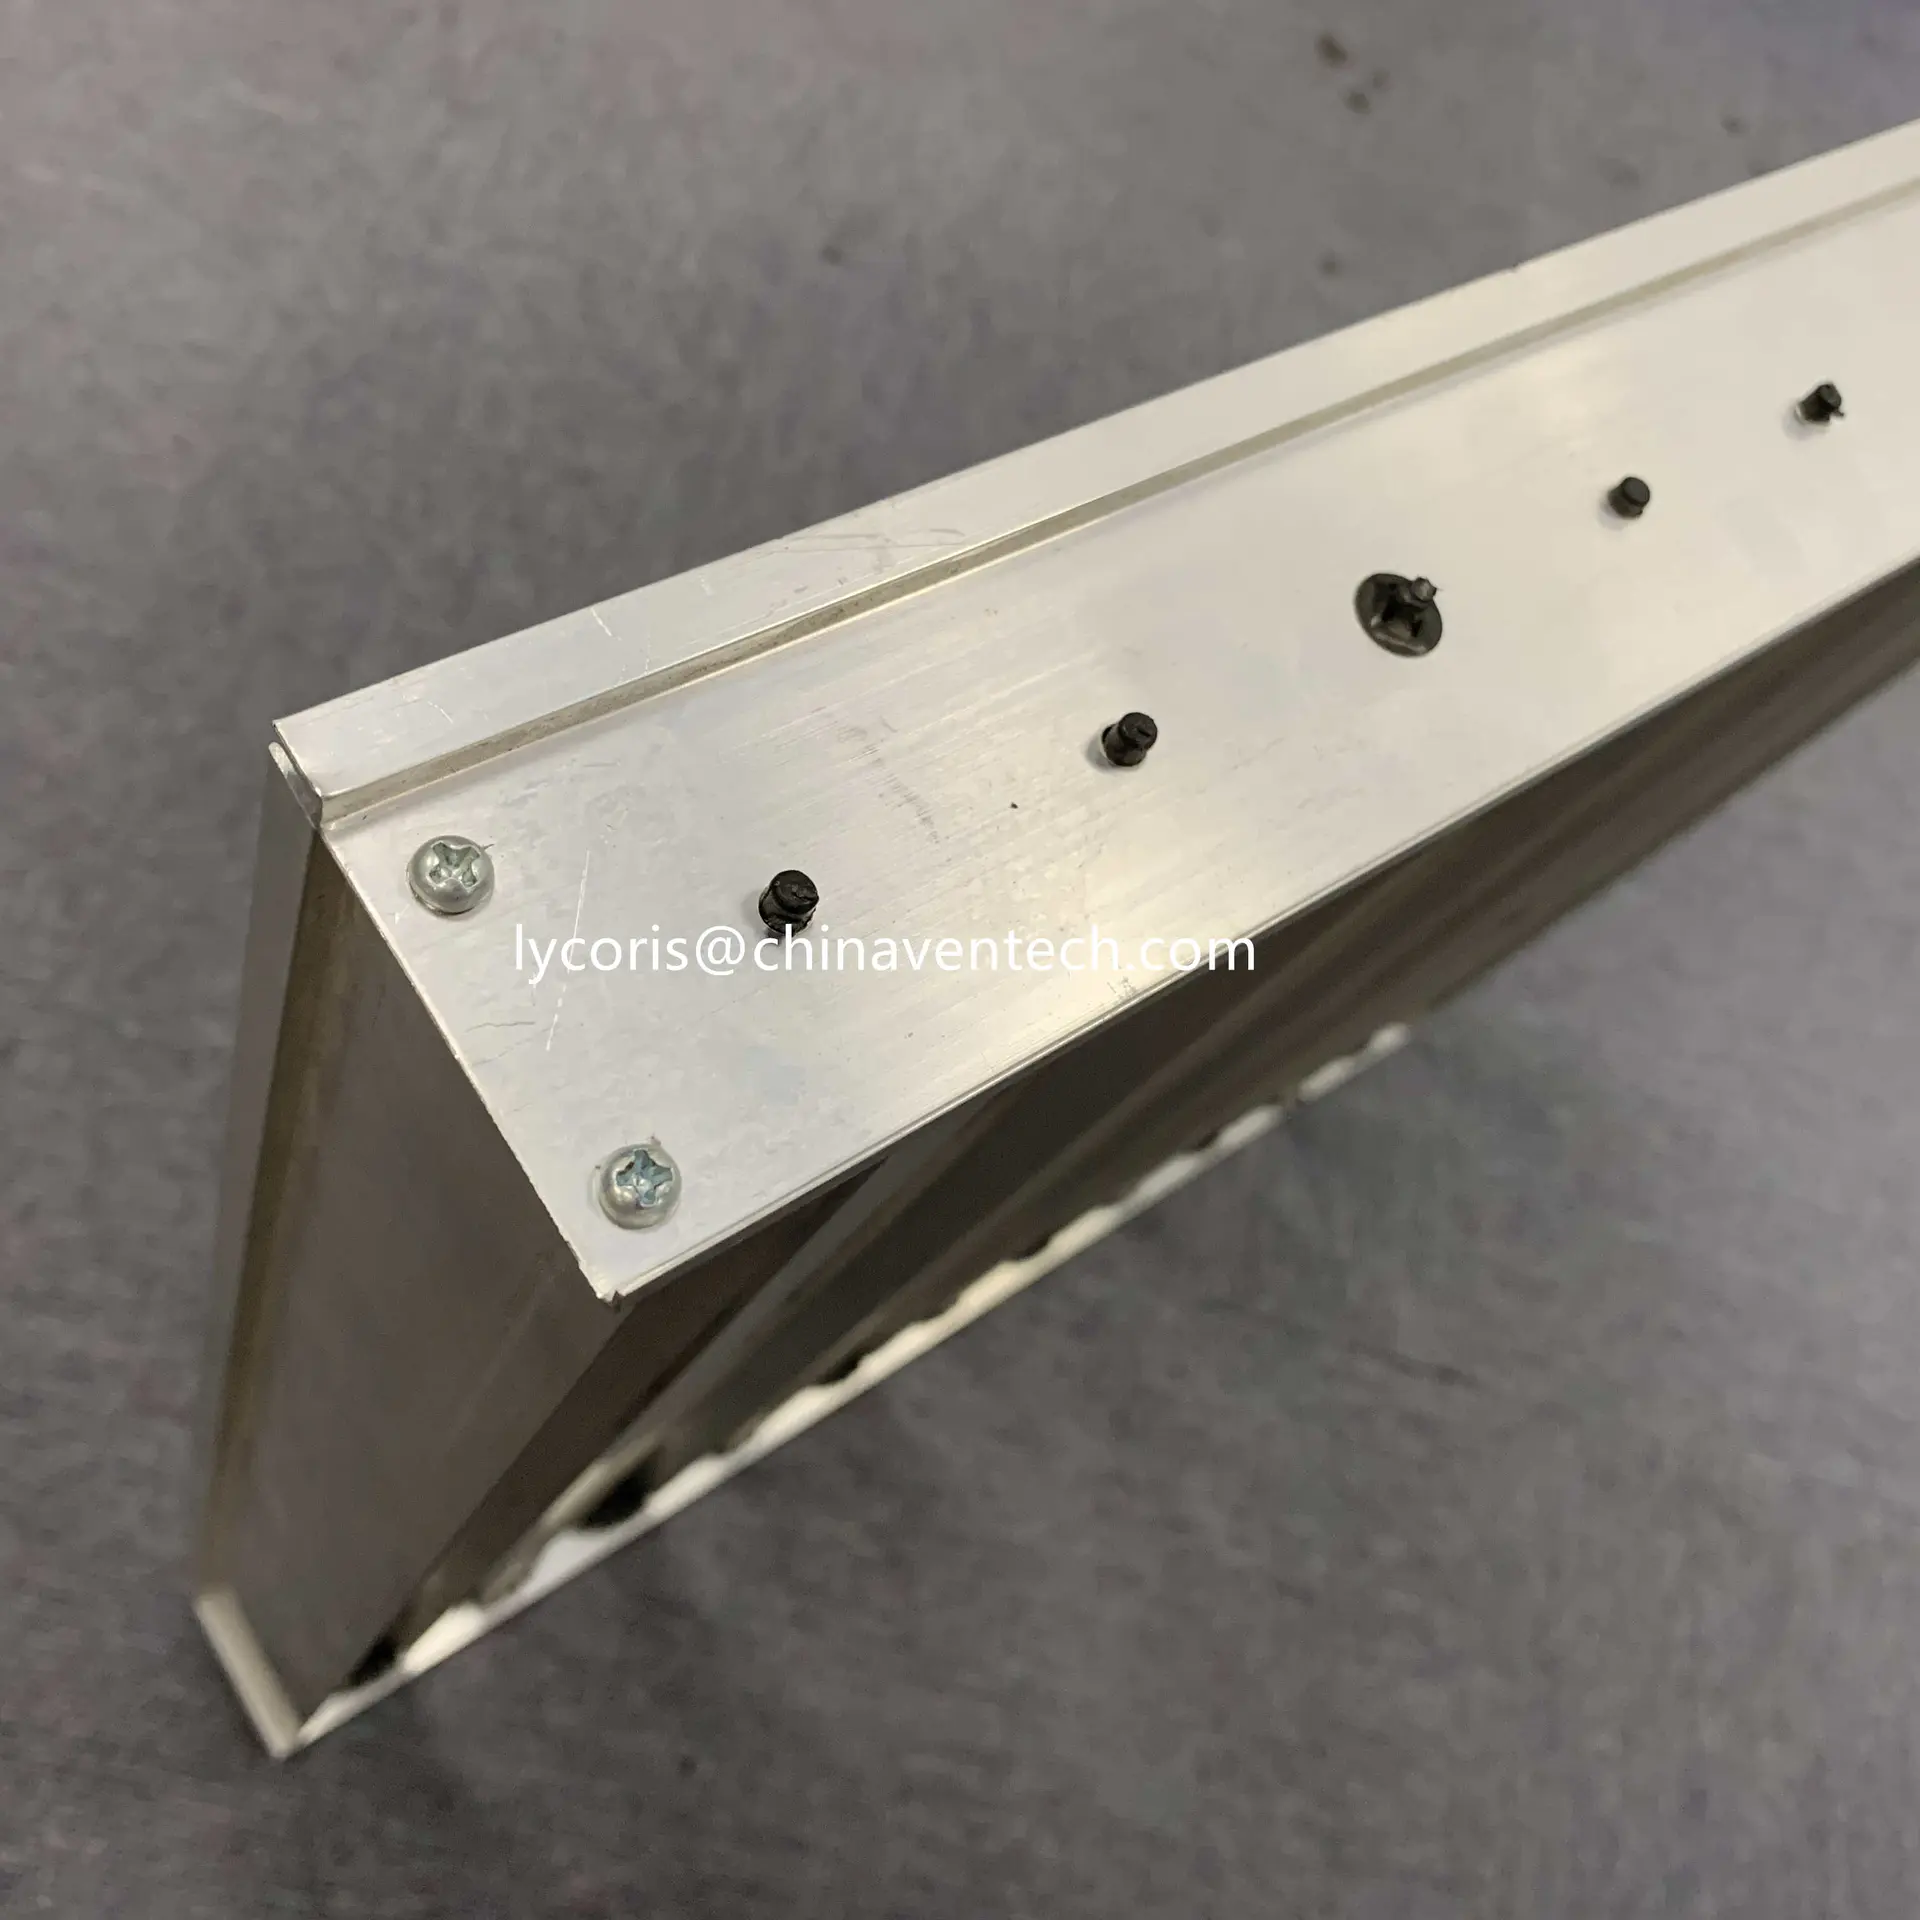 Aluminum Ceiling Diffuser Return Air Diffuser Accessories Supply Air Grille Oppose Blade Damper Manual Duct Gear Damper